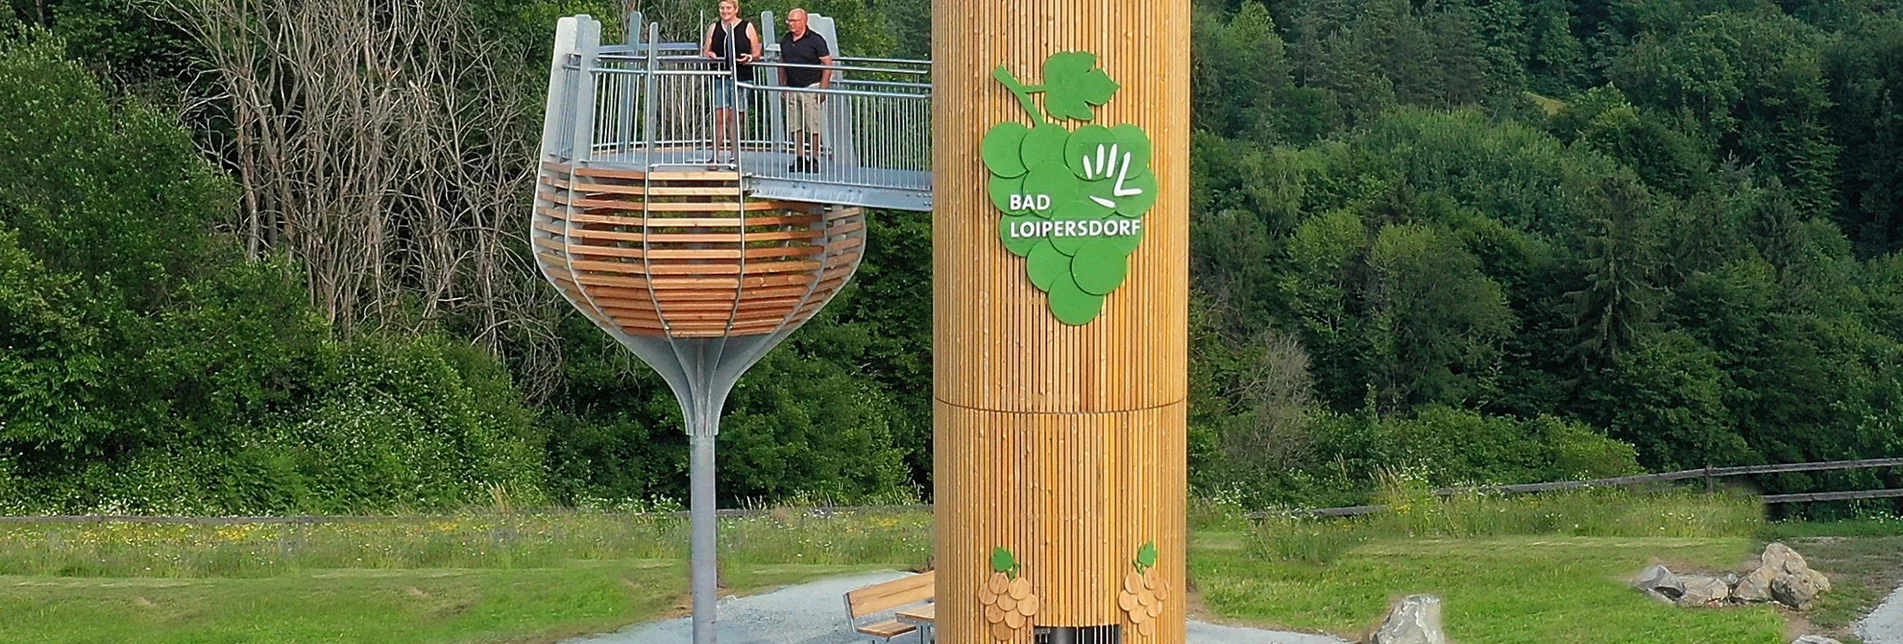 Theme path Wine Experience Trail (Wein-Erlebnis-Weg) Bad Loipersdorf - Touren-Impression #1 | © Gemeinde Bad Loipersdorf